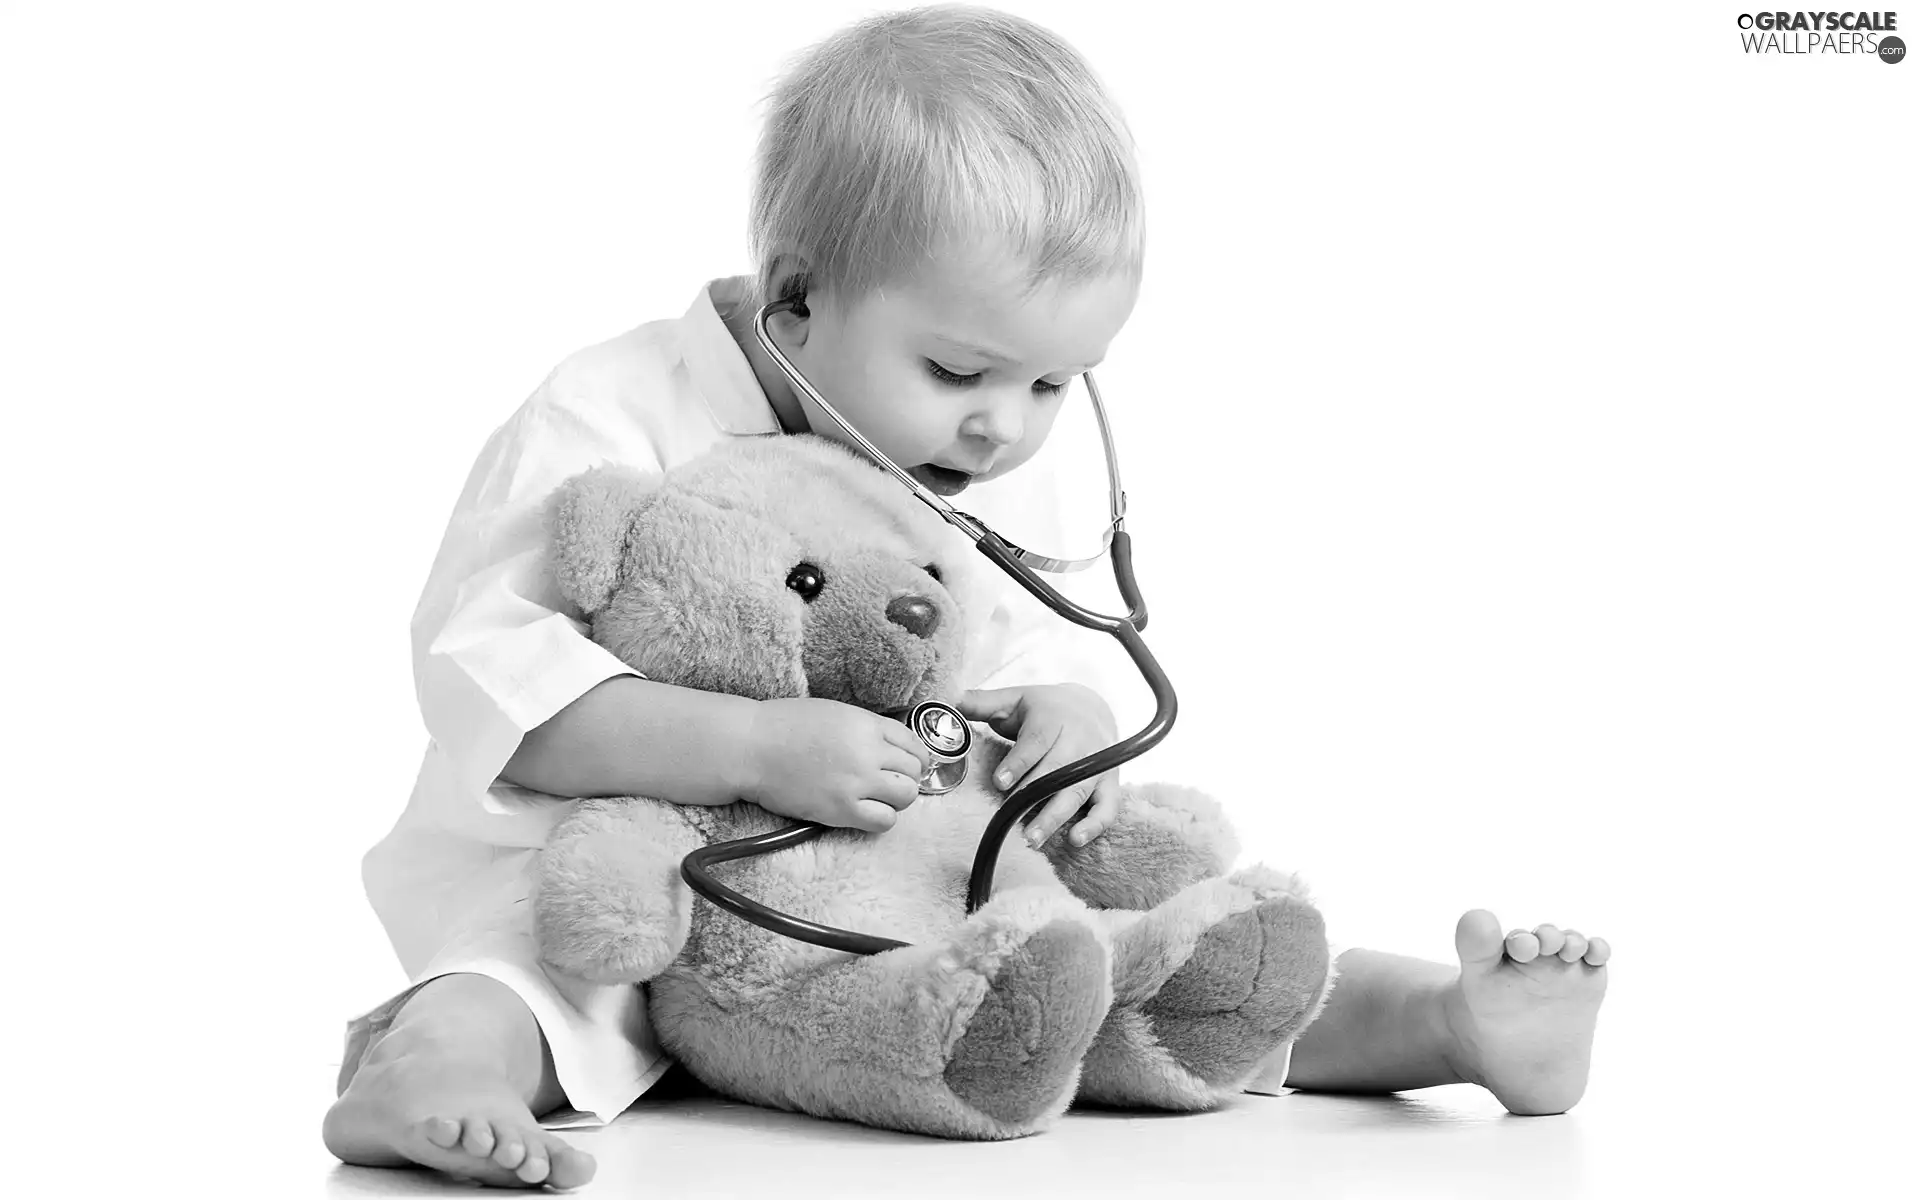 Kid, teddy bear, doctor, toy